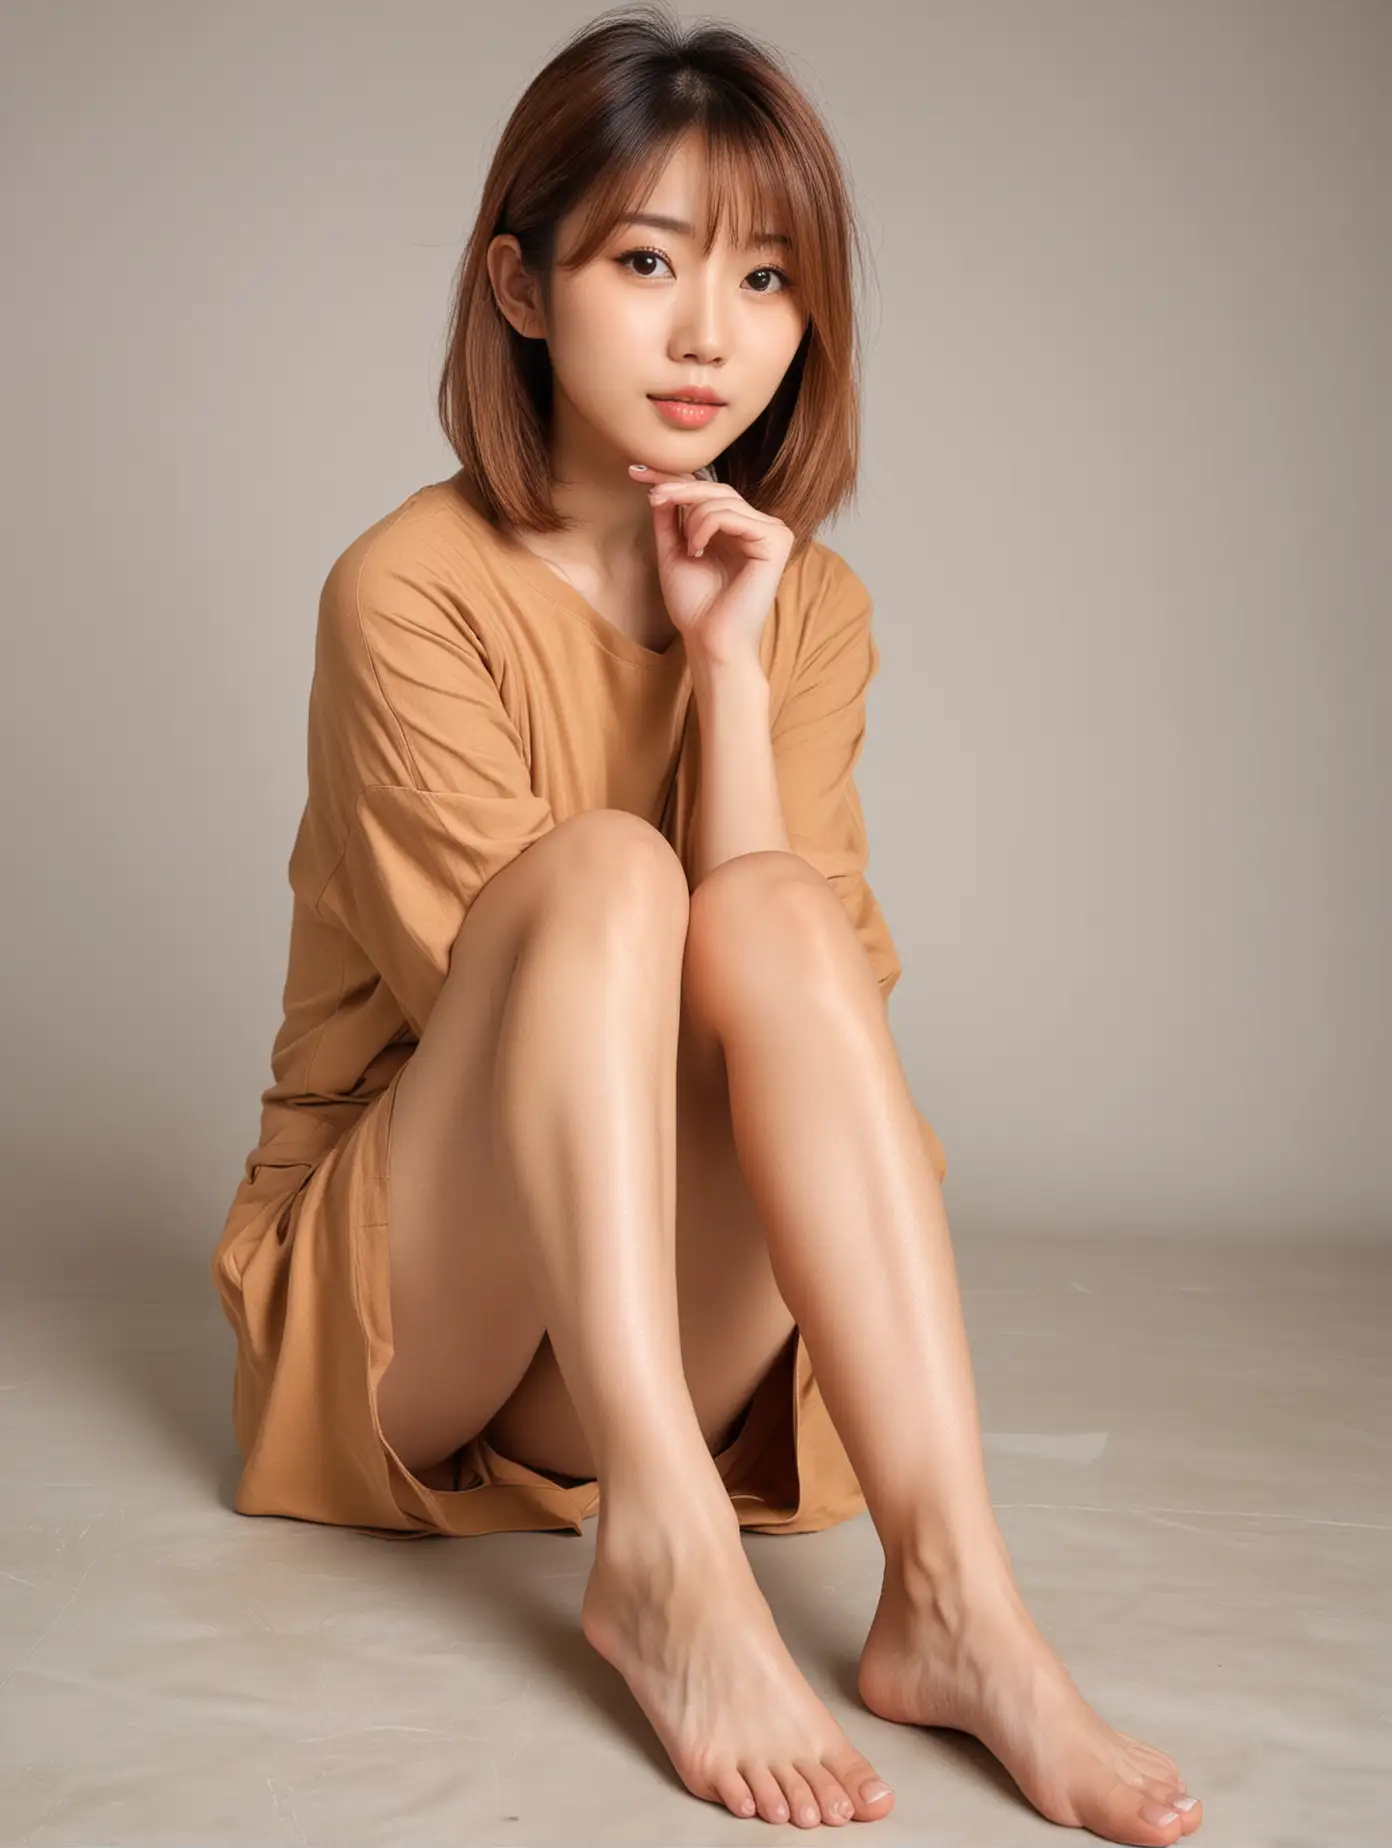 Japanese Girl Posing with CaramelColored Medium Length Hair